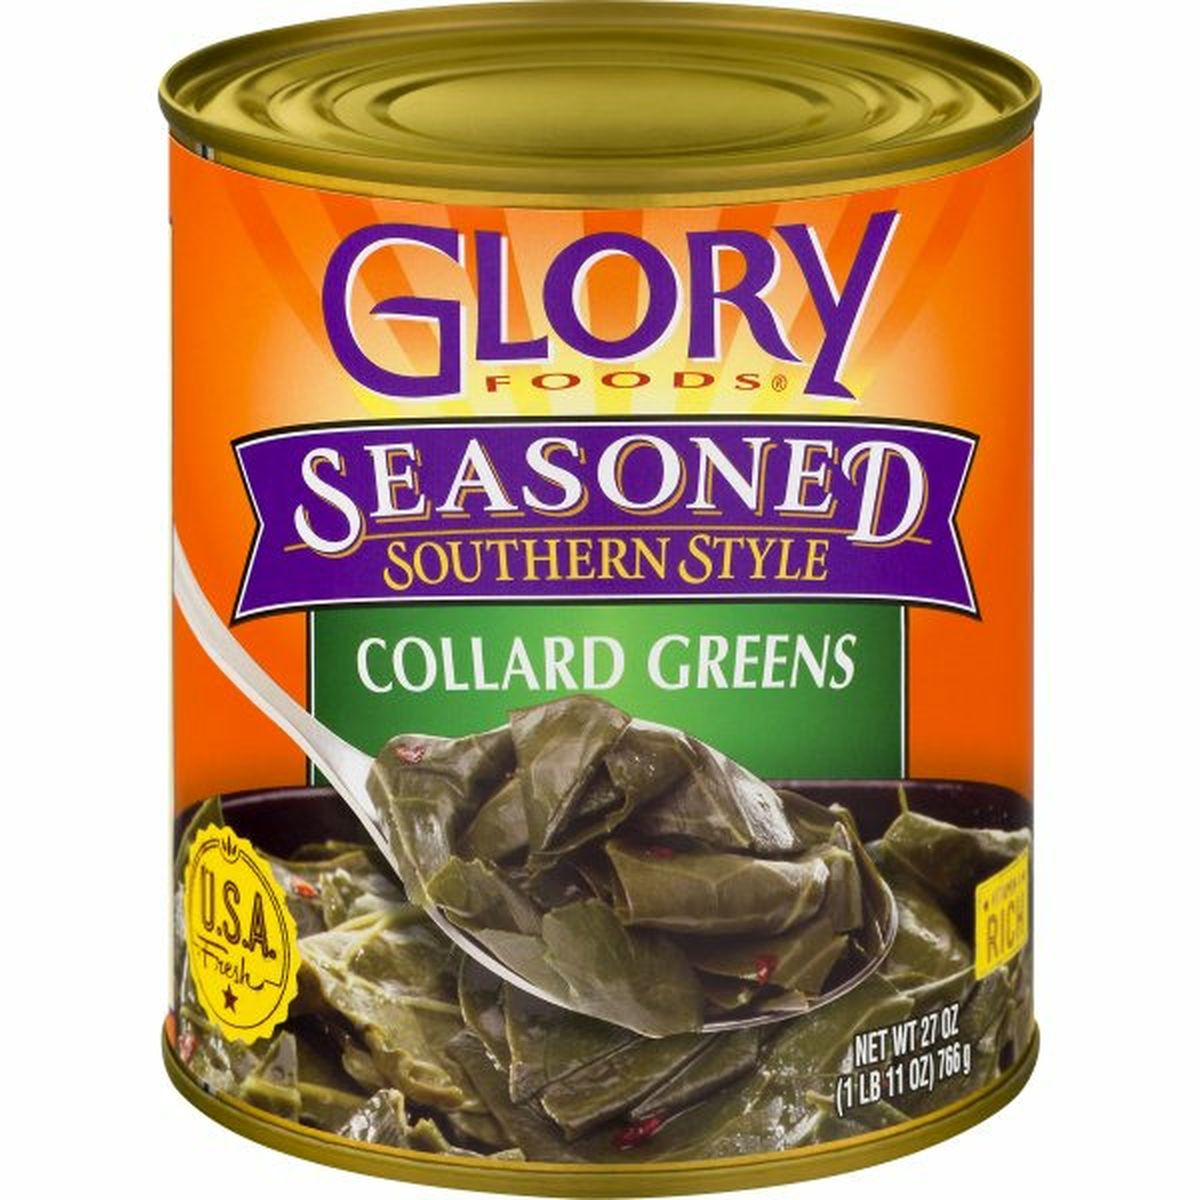 Calories in Glory Foods Collard Greens, Seasoned